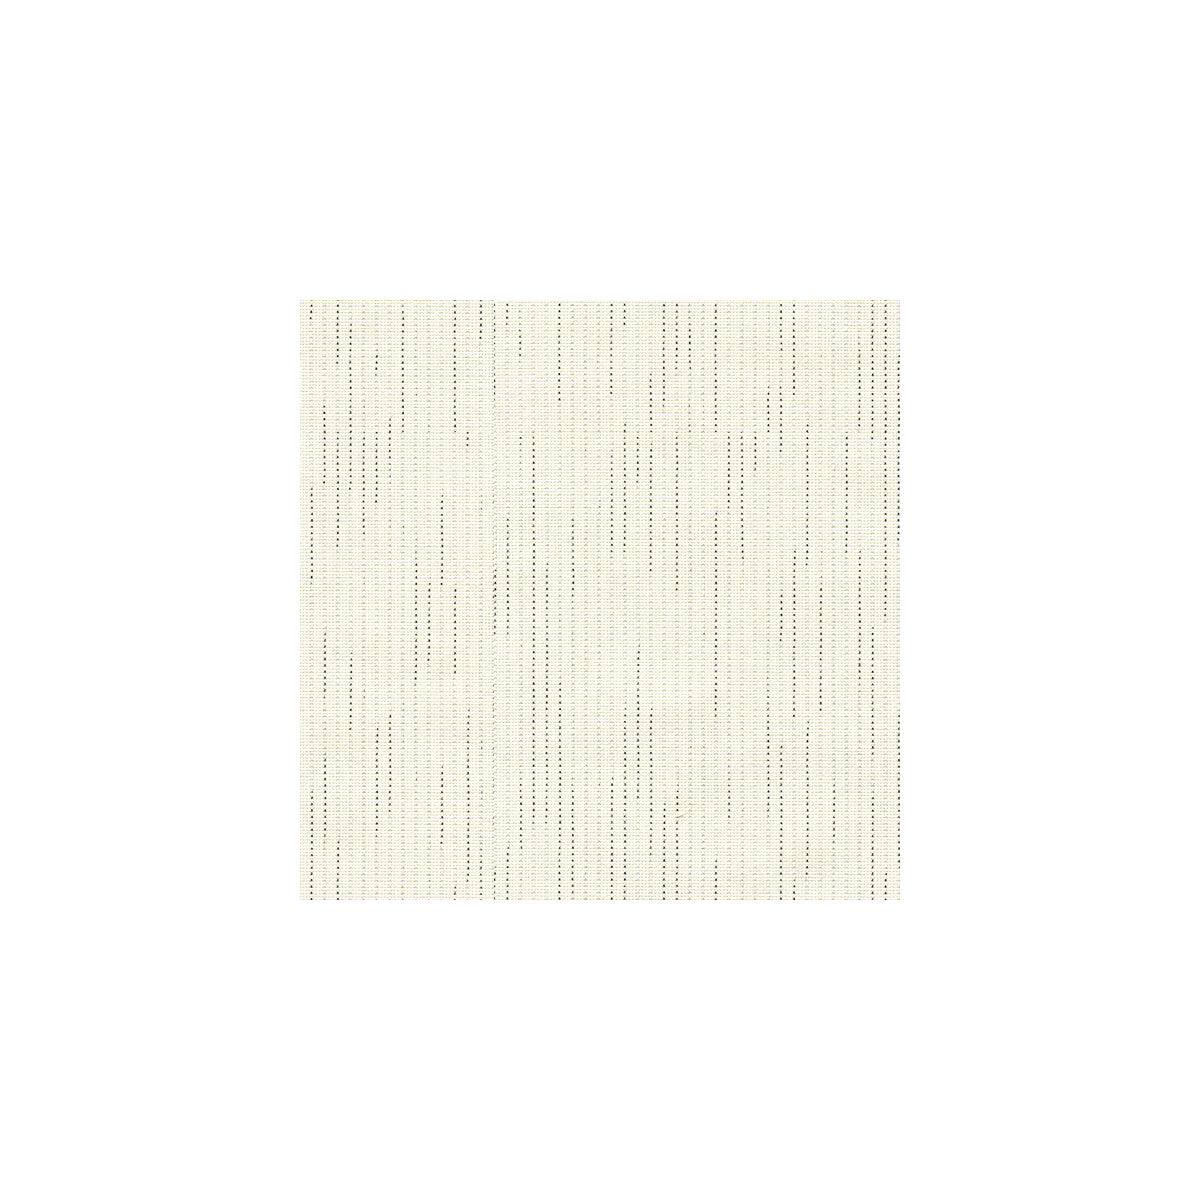 Kravet Basics fabric in 3698-1 color - pattern 3698.1.0 - by Kravet Basics in the Gis collection